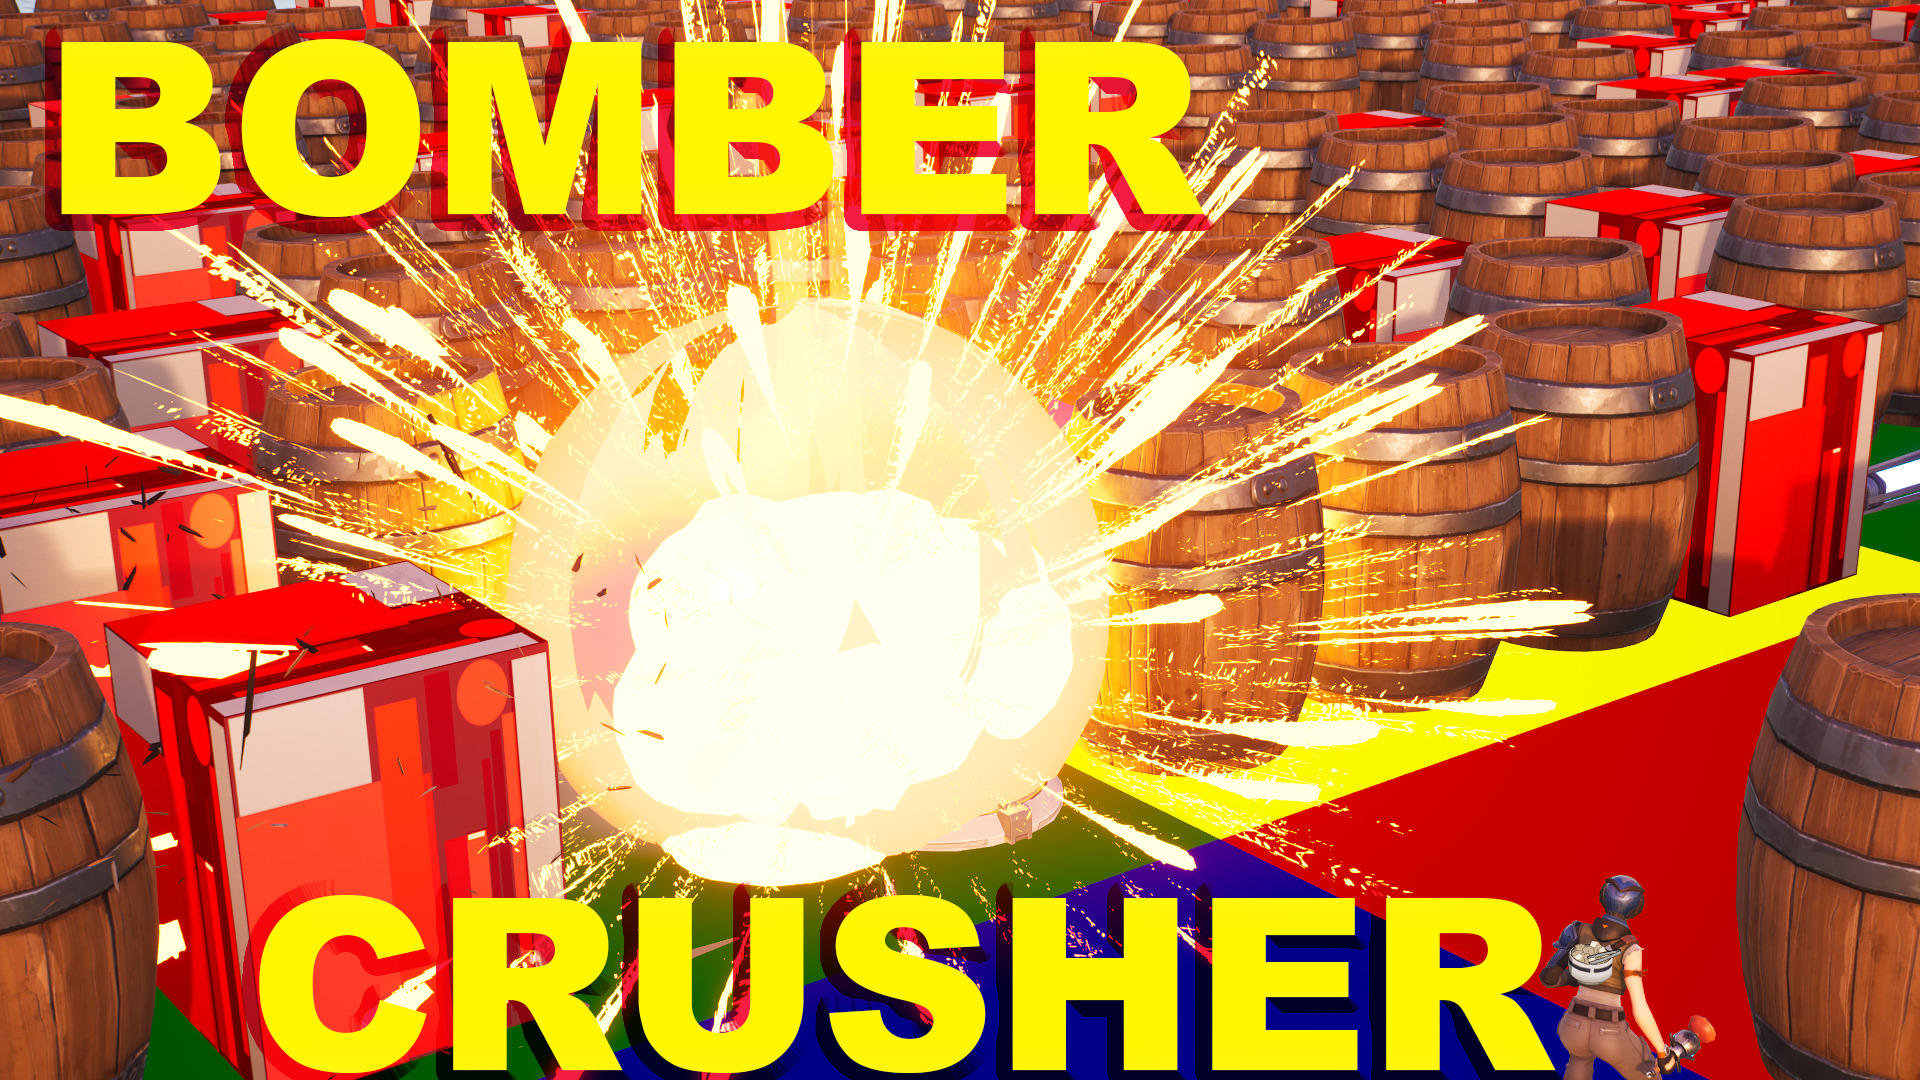 BOMBER CRUSHER | 【学びラボ】ROBLOX,UEFN,blender,IT教育のコミュニティ